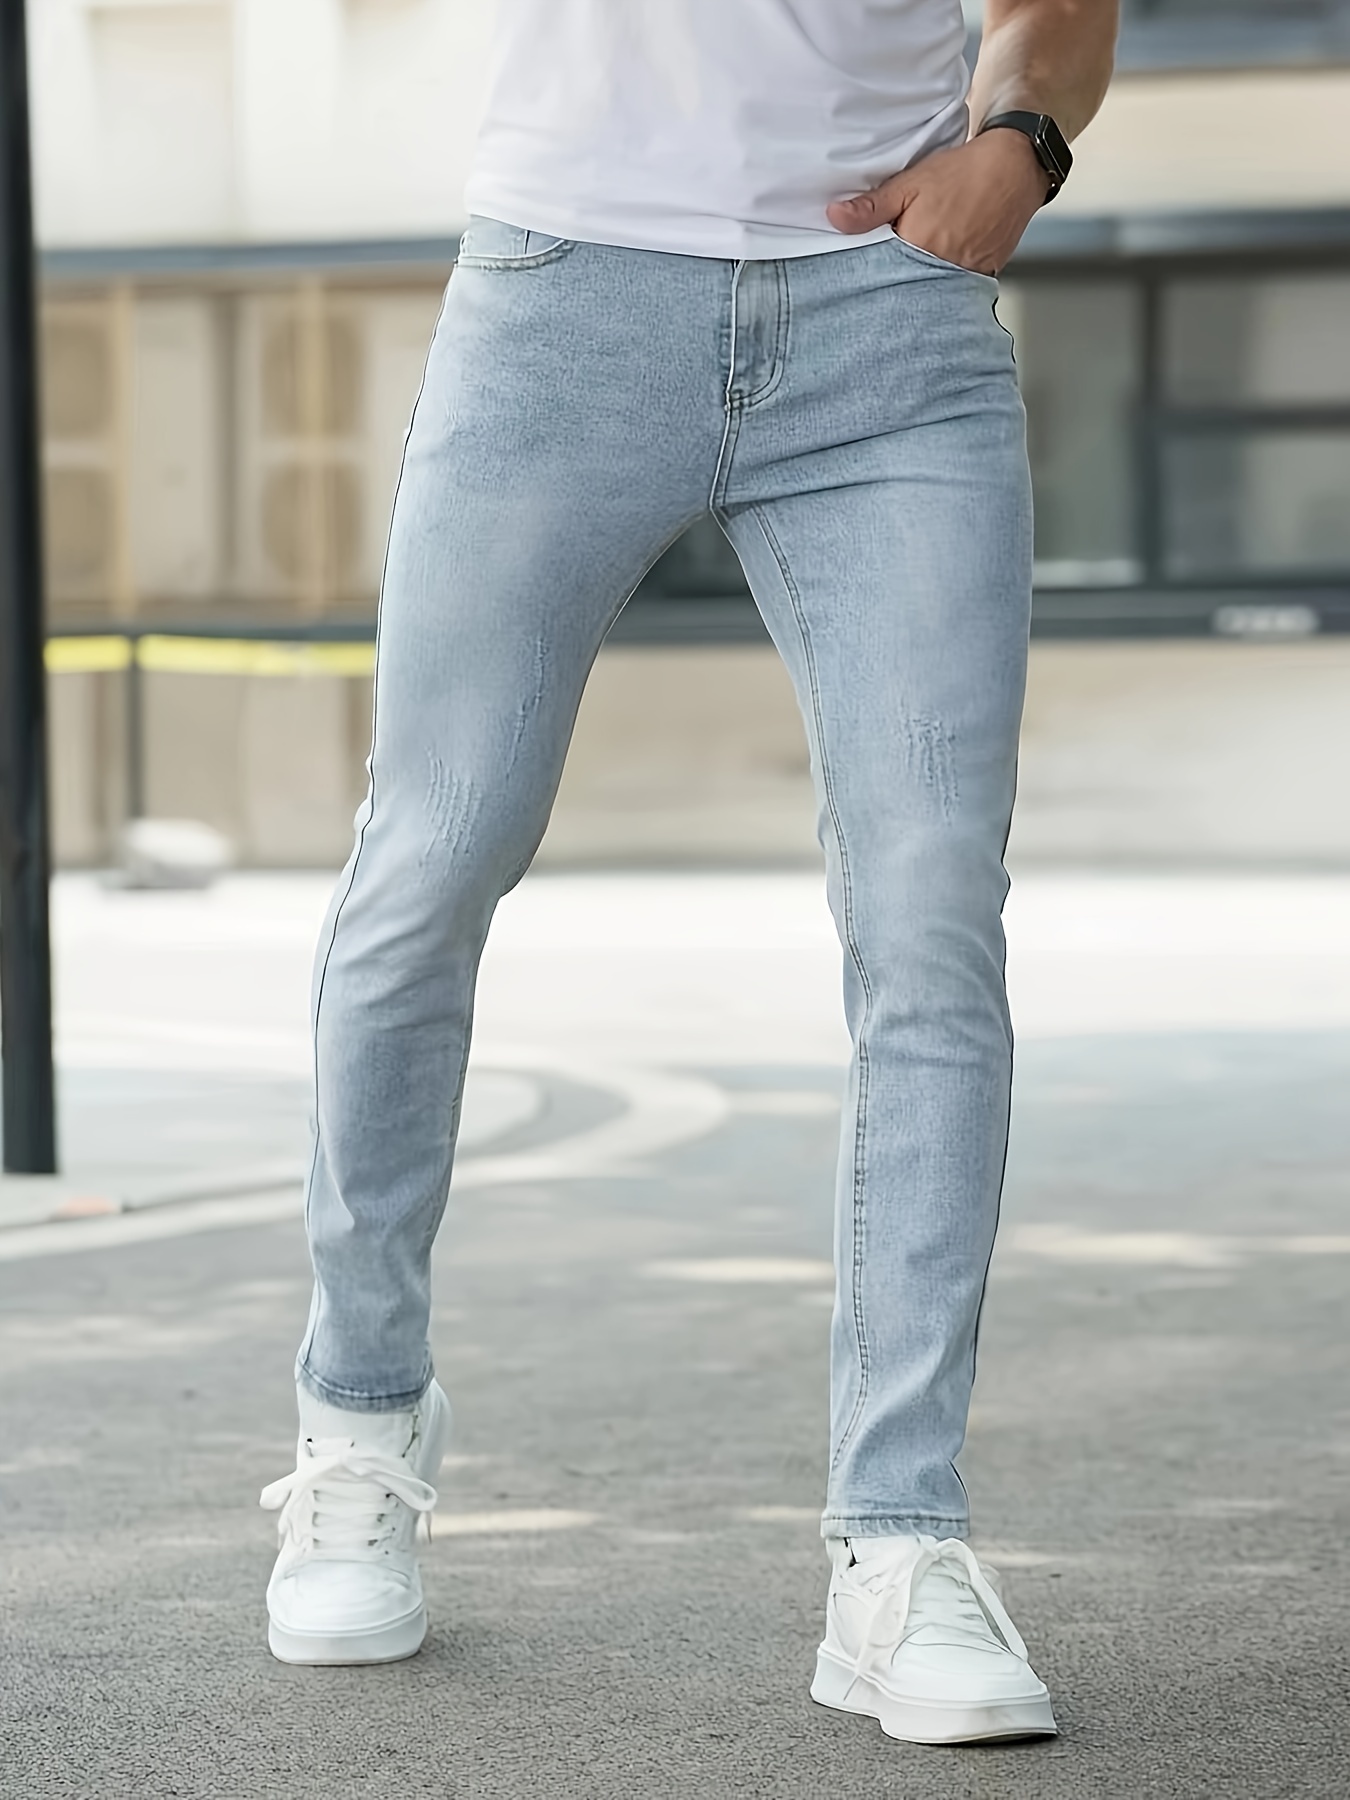 Washed Slim Jeans - Men - Ready-to-Wear